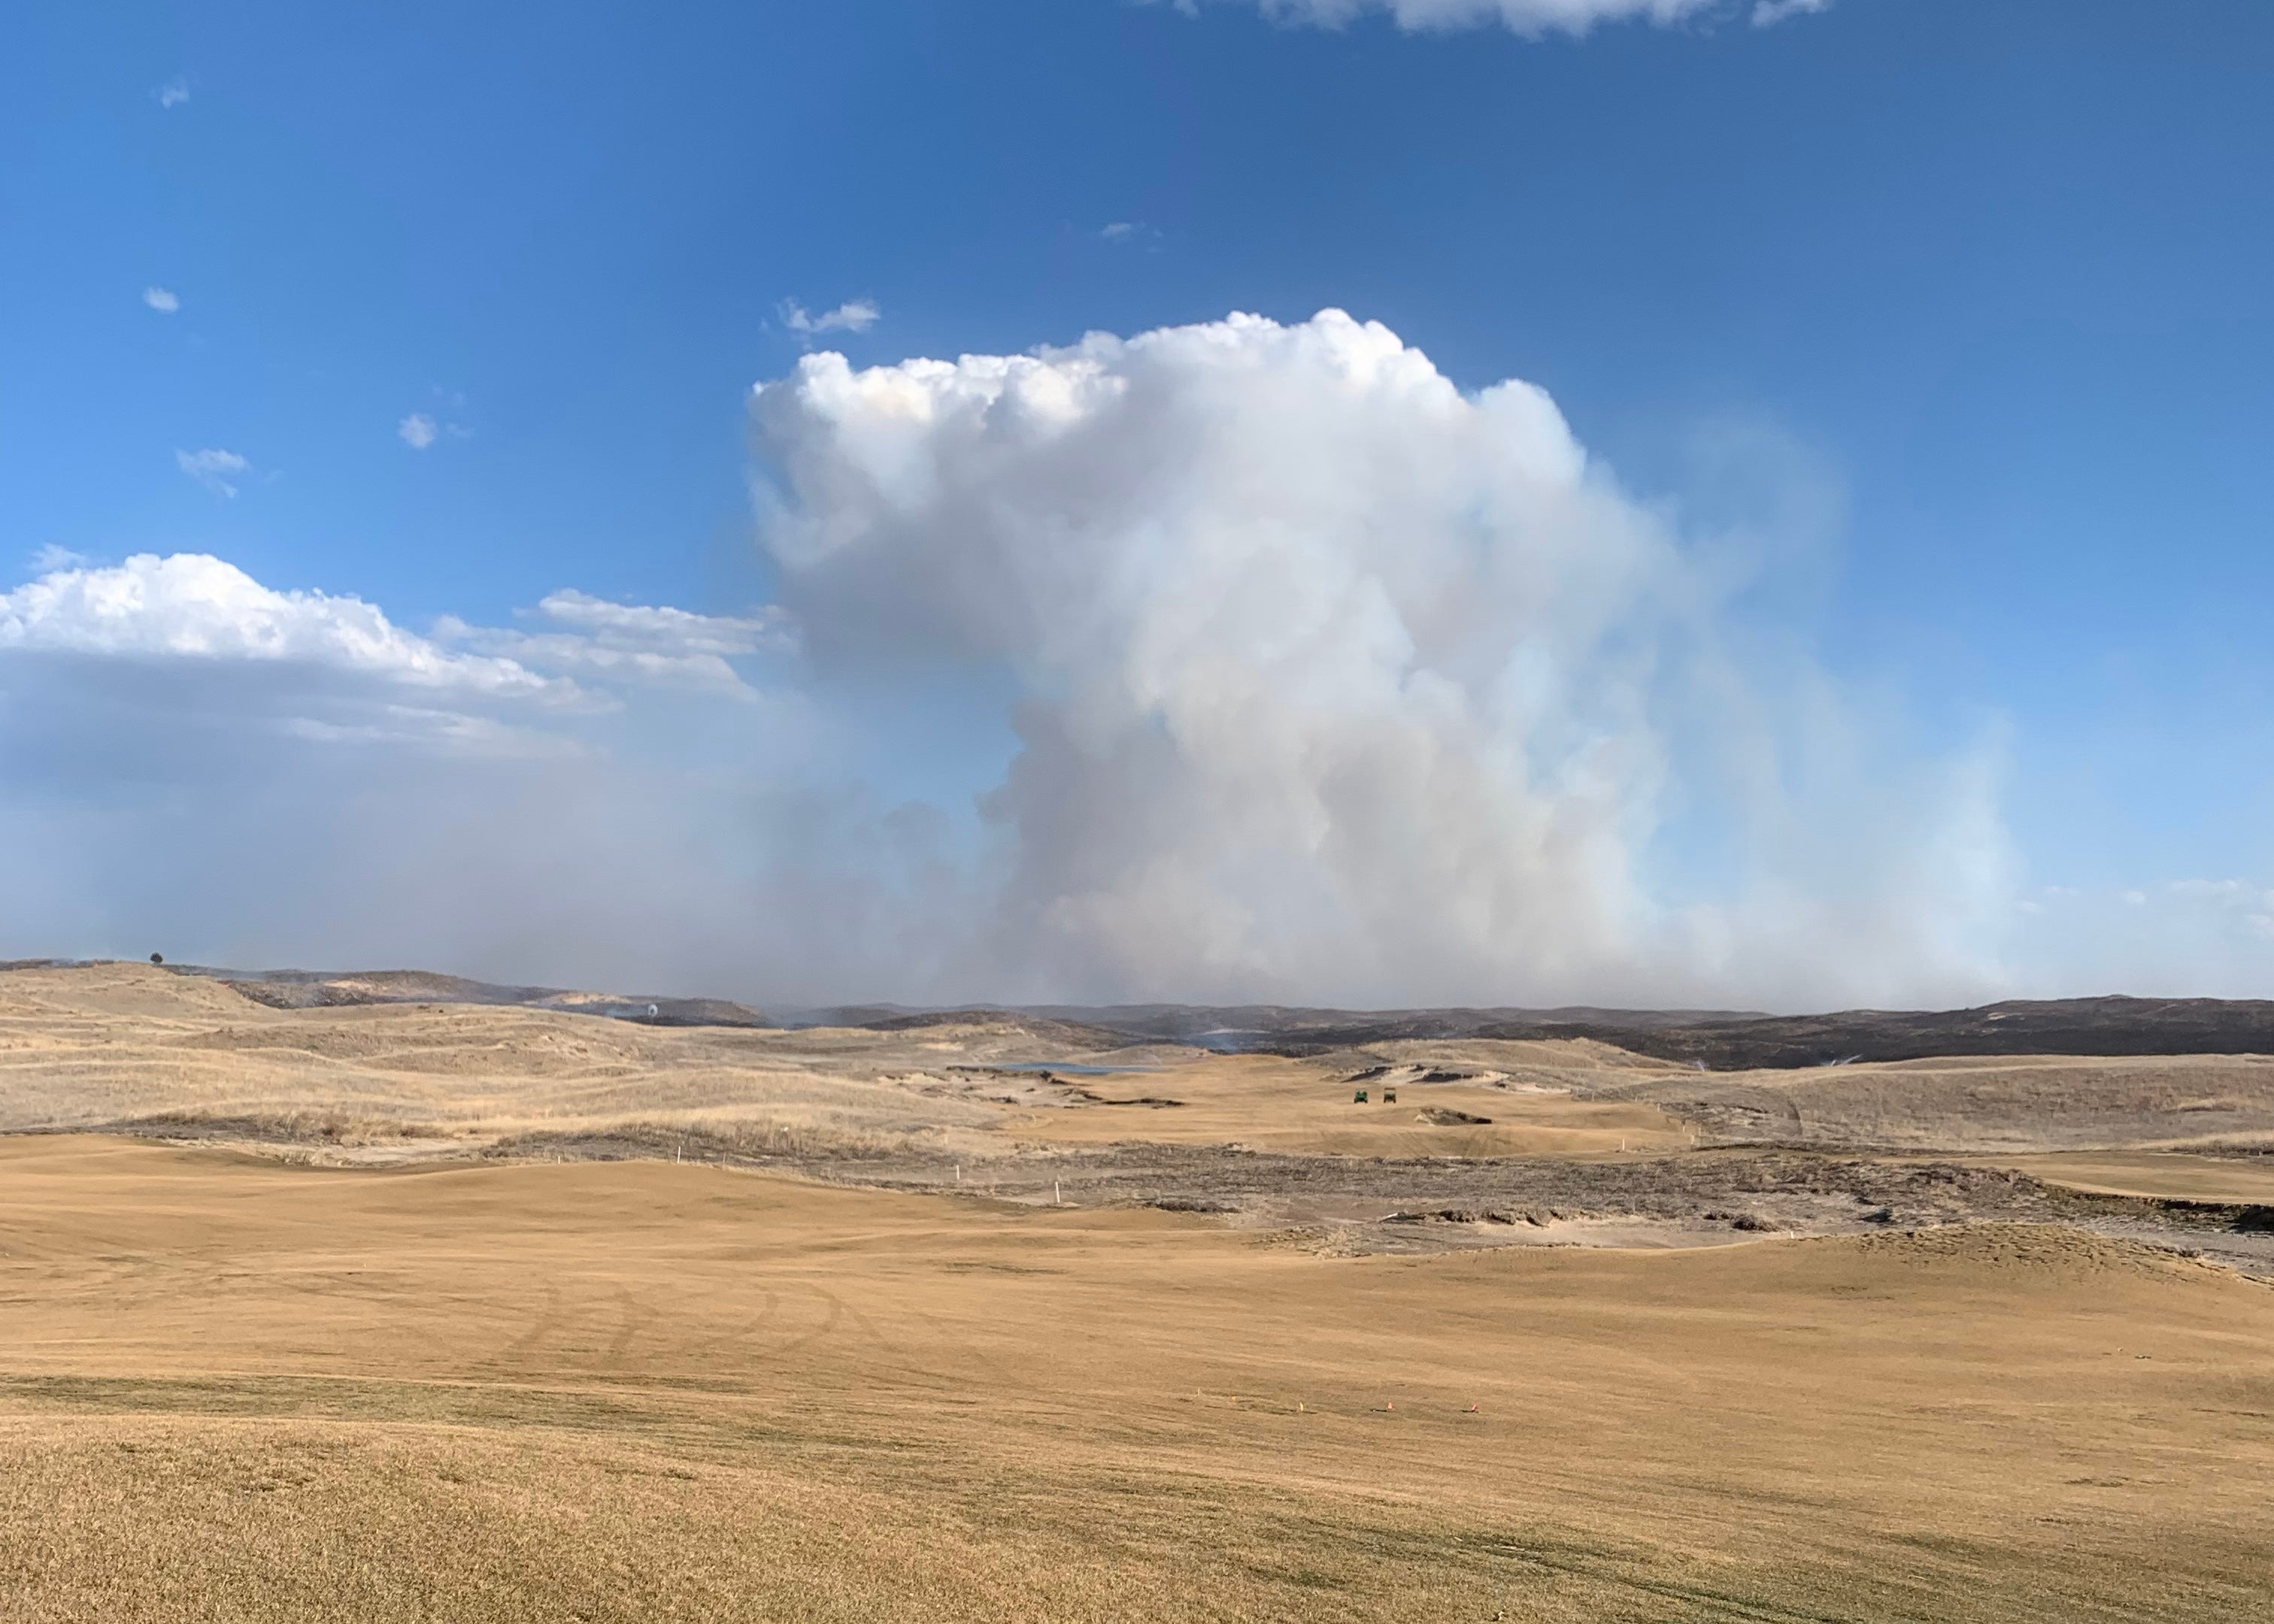 Plume of smoke rises above Sandhills of Nebraska